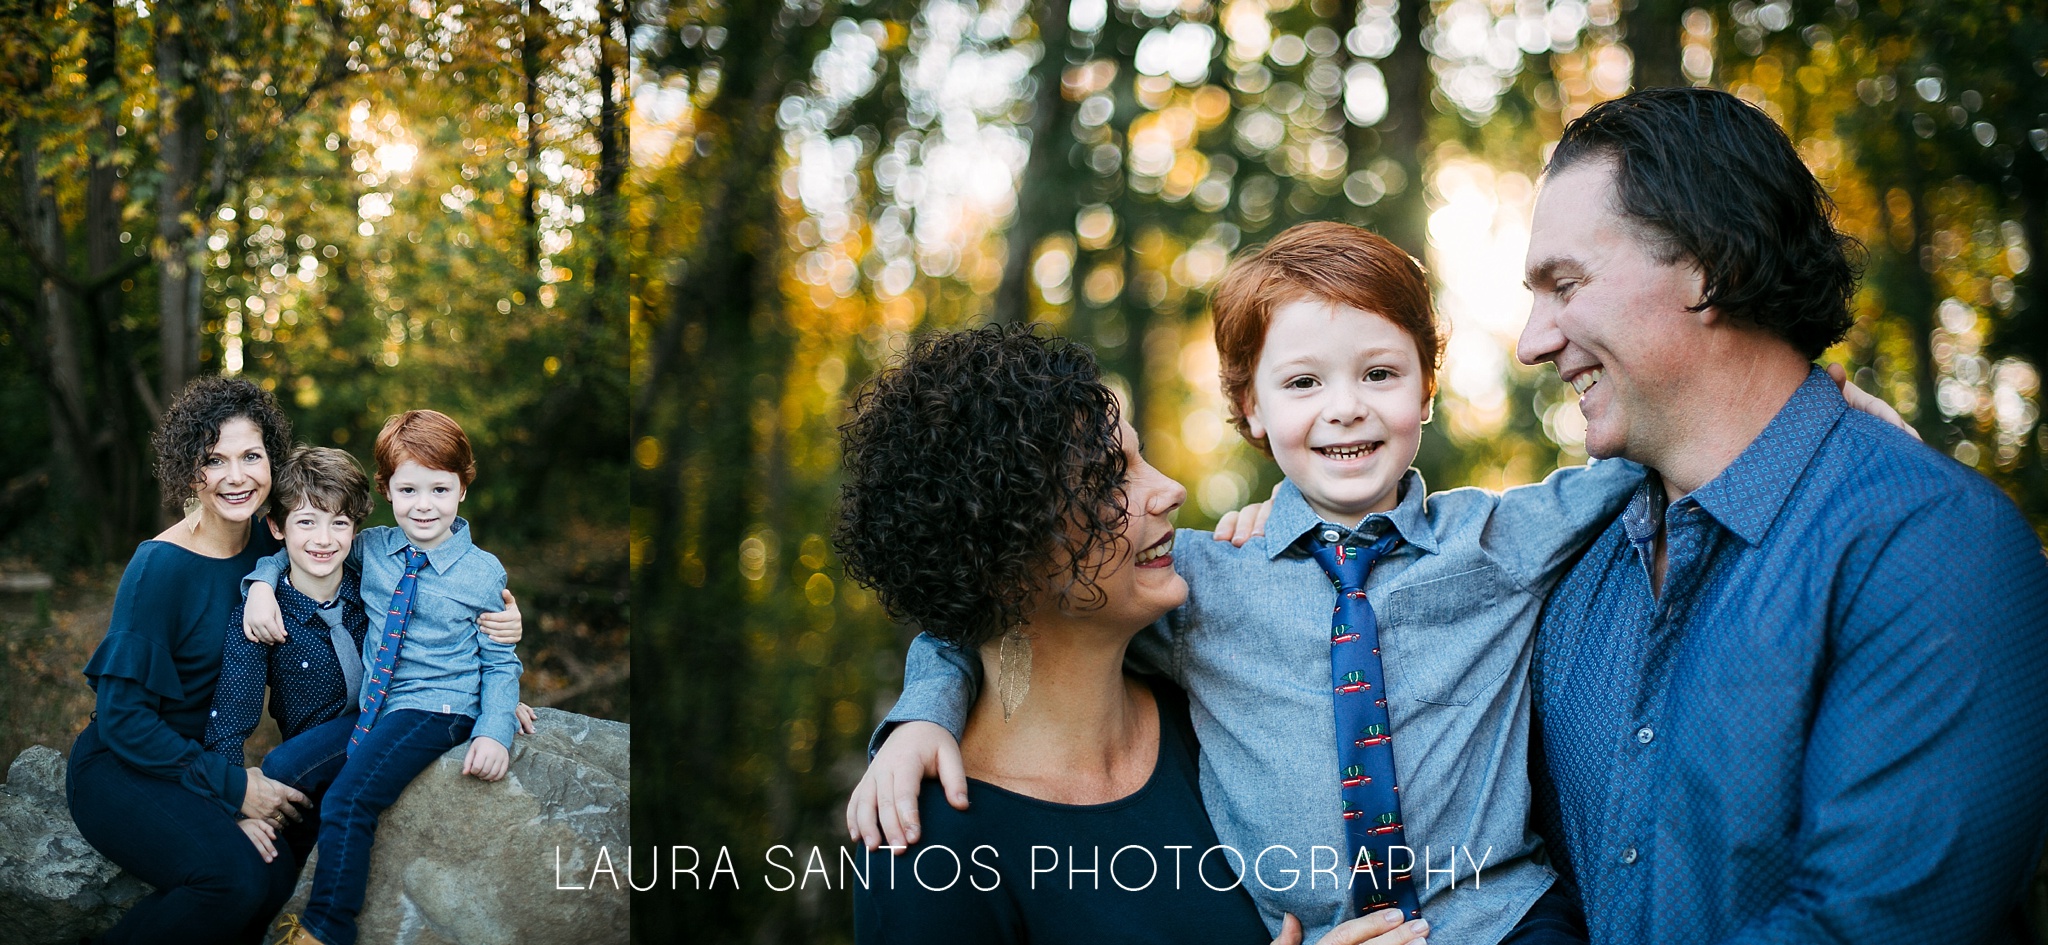 Laura Santos Photography Portland Oregon Family Photographer_0480.jpg